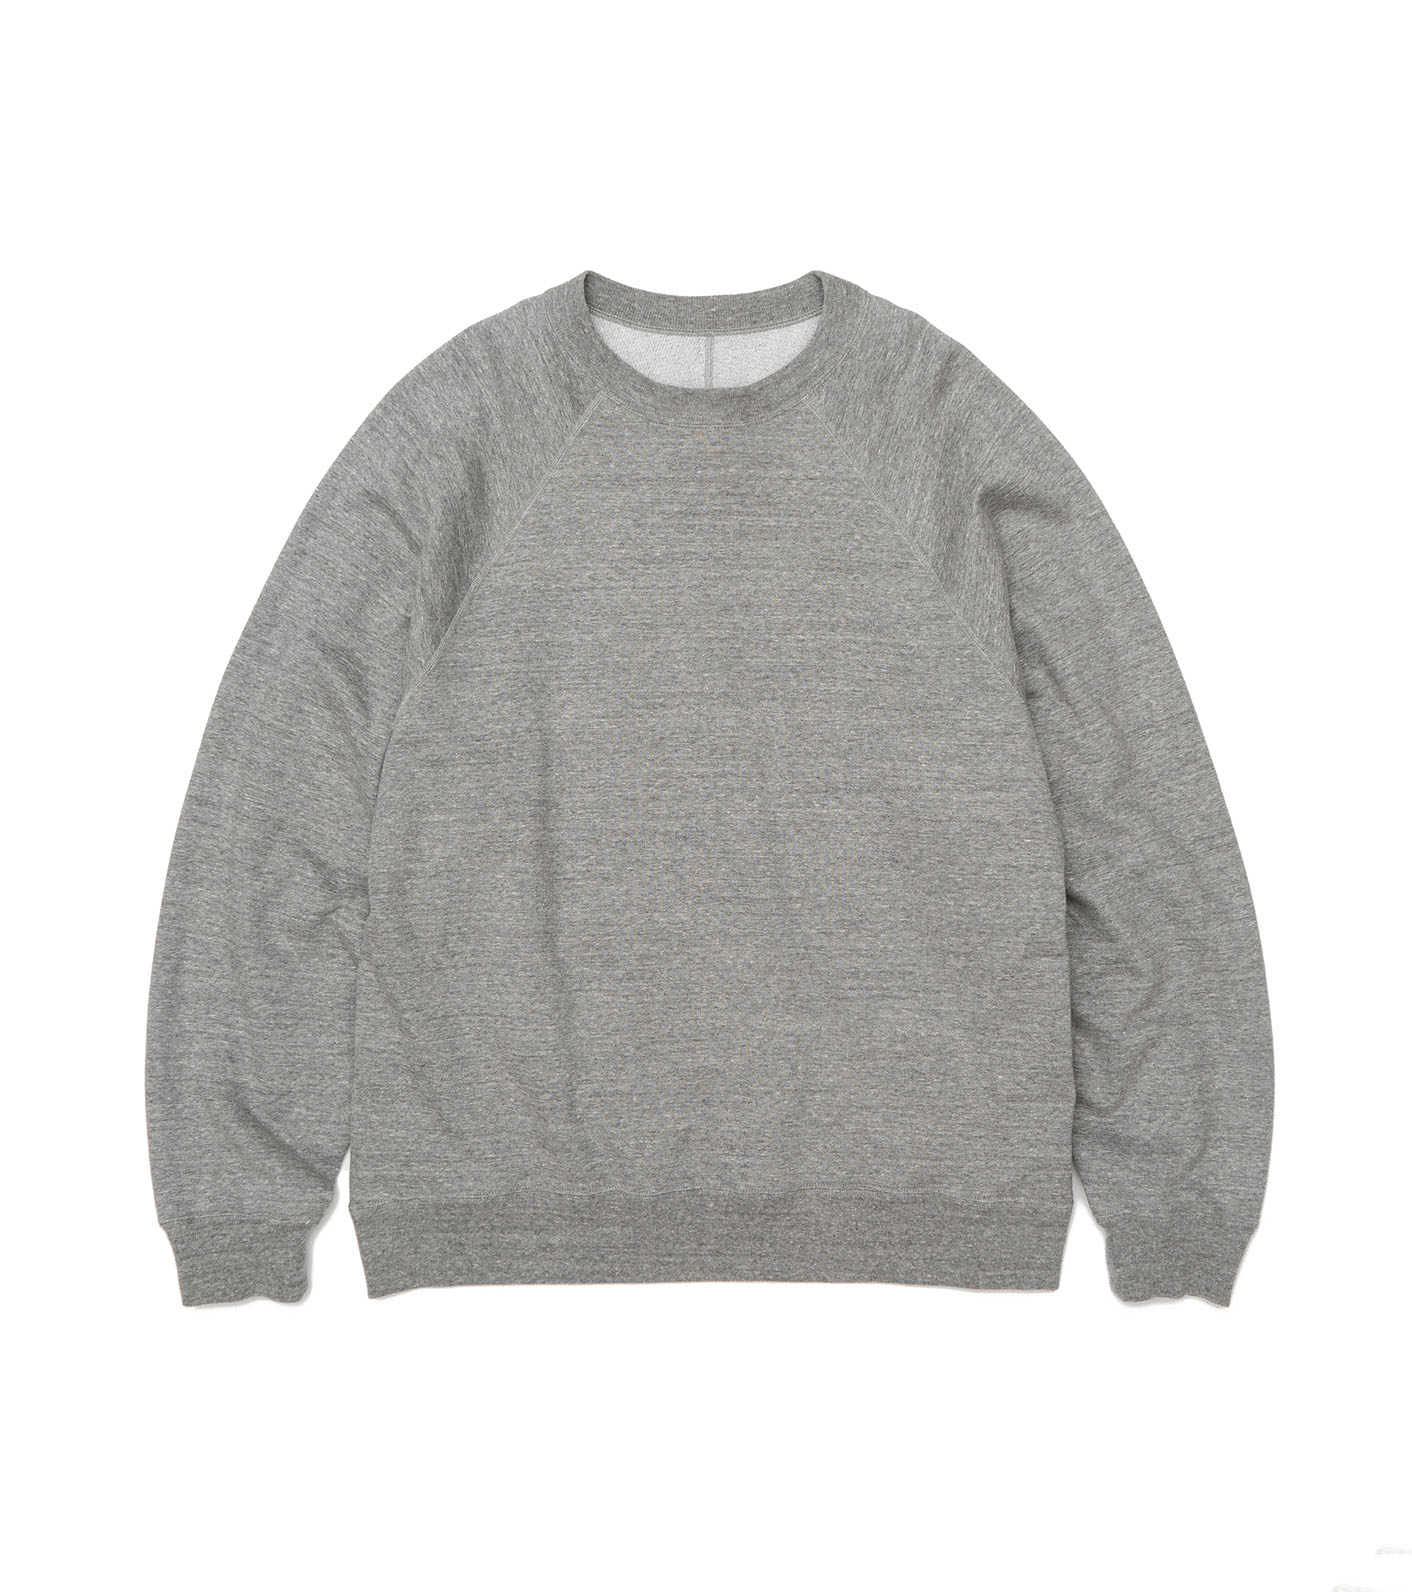 Black XL discount 77% MEN FASHION Jumpers & Sweatshirts Sports Lotto sweatshirt 